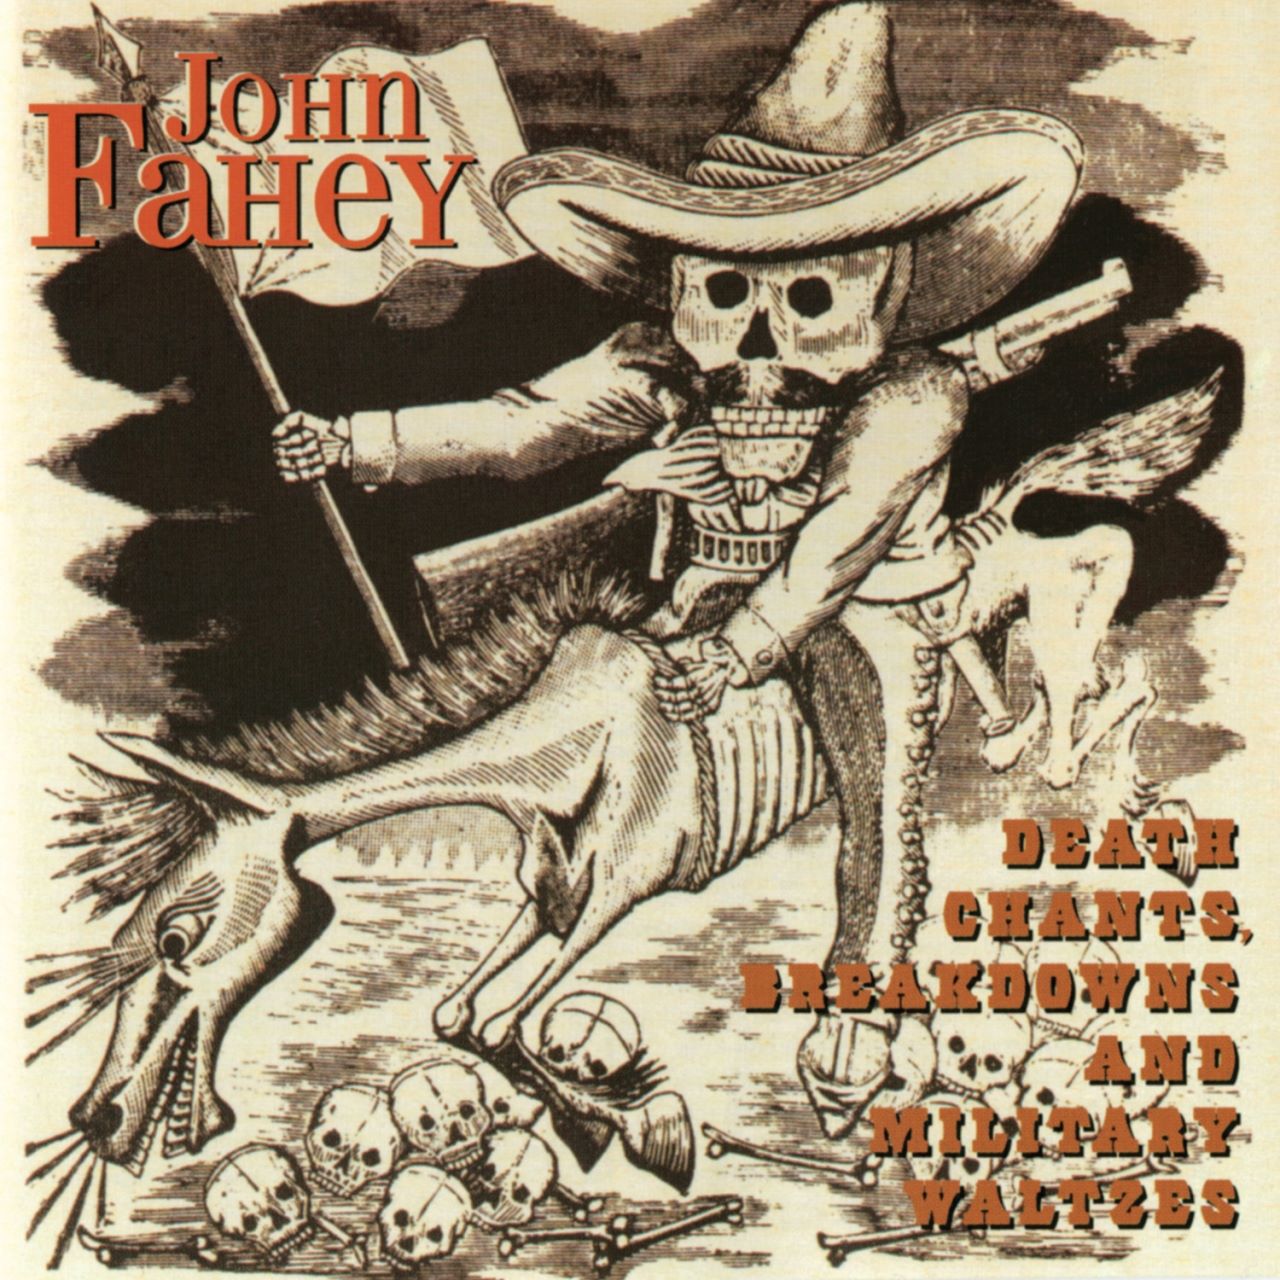 John Fahey - Death Chants, Breakdown And Military Waltzes cover album